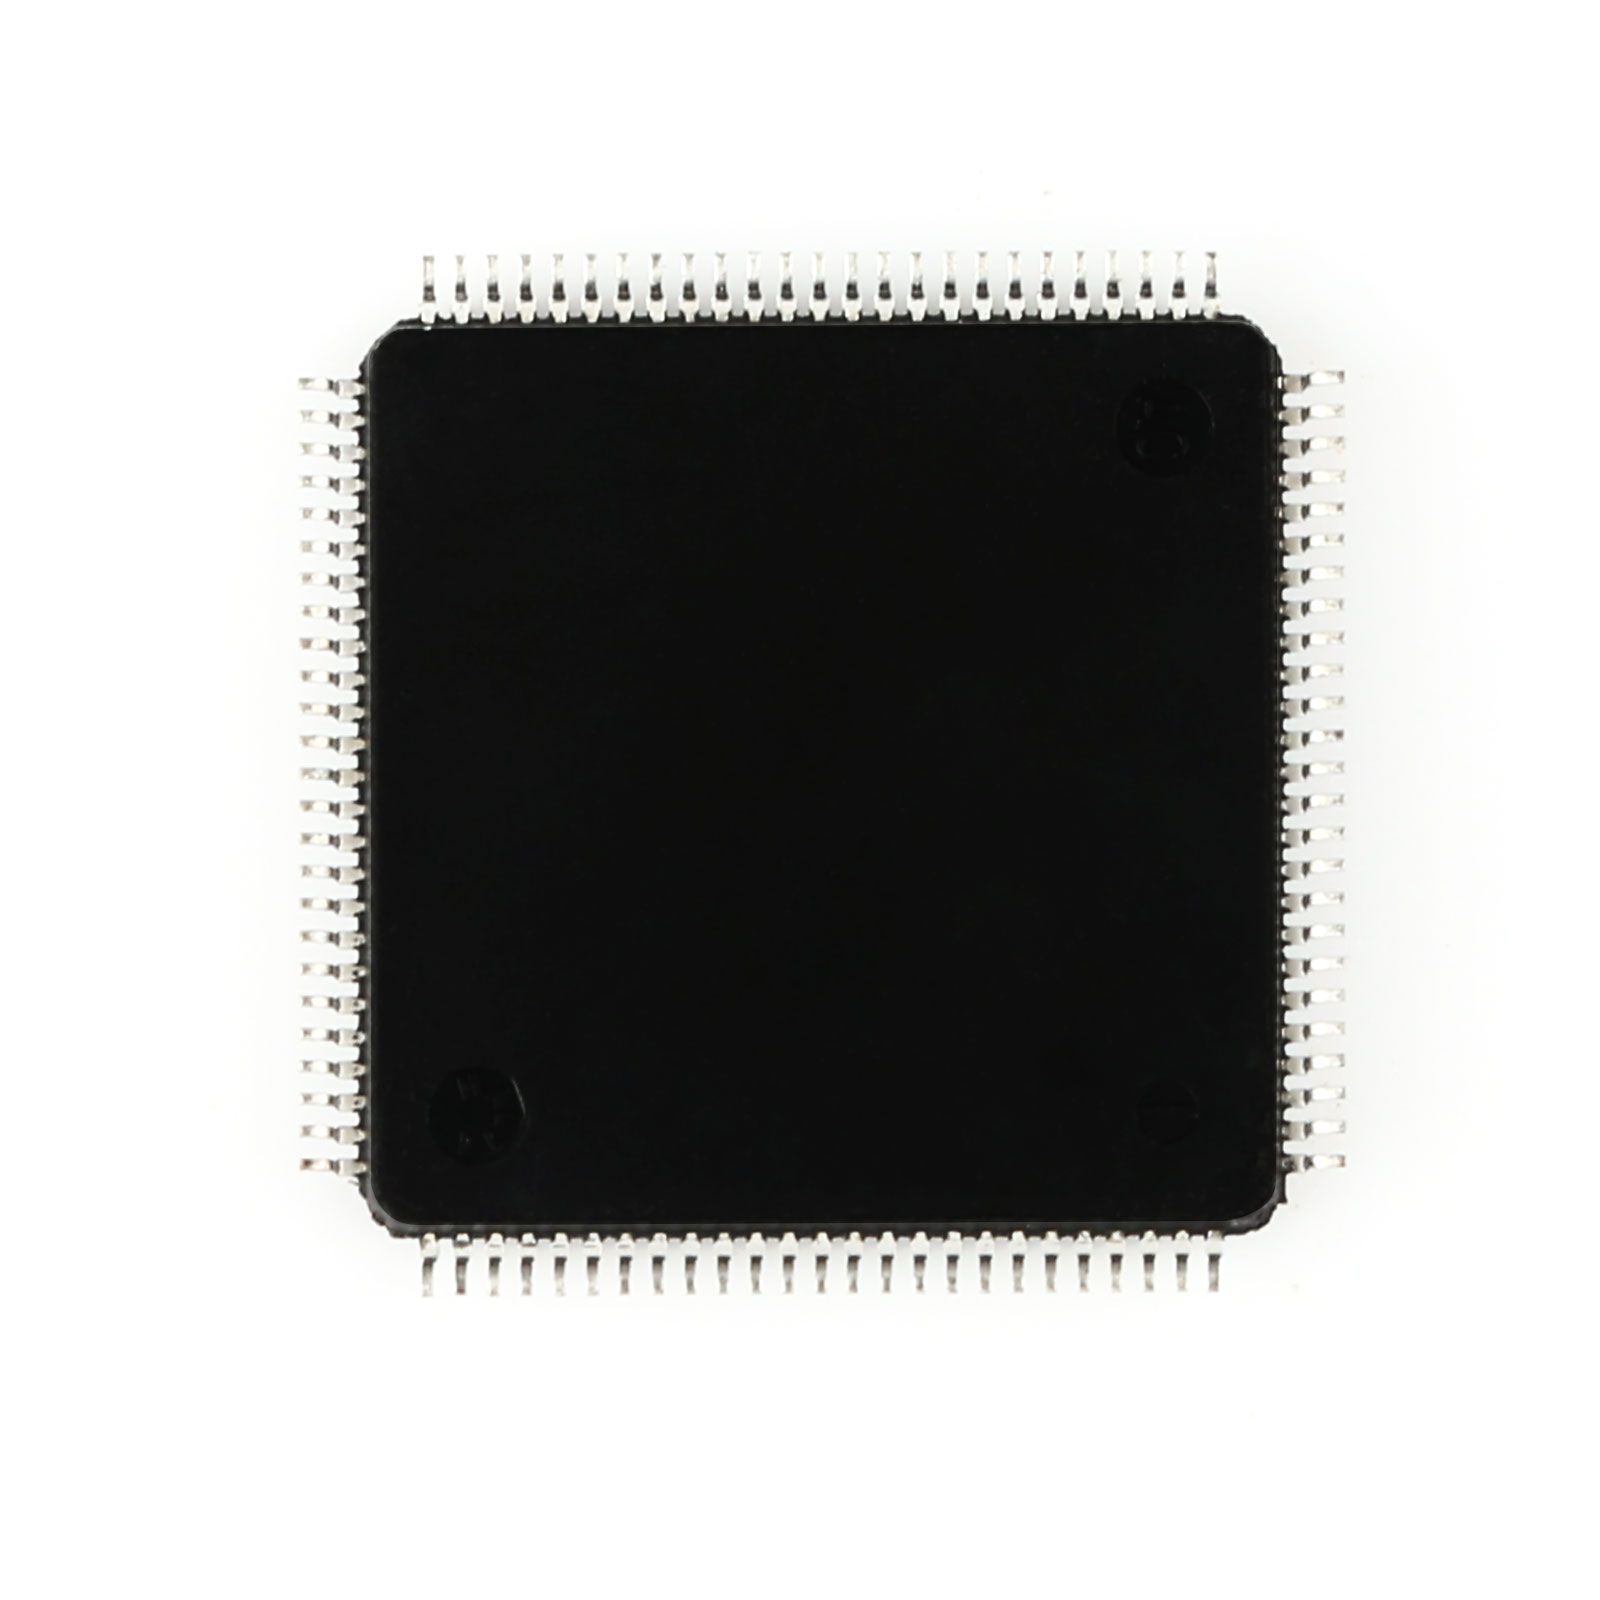 RFA module CPU spc560b puce vierge avec programme pour yanhua micro ACDP module 24 nouveau jlr immo